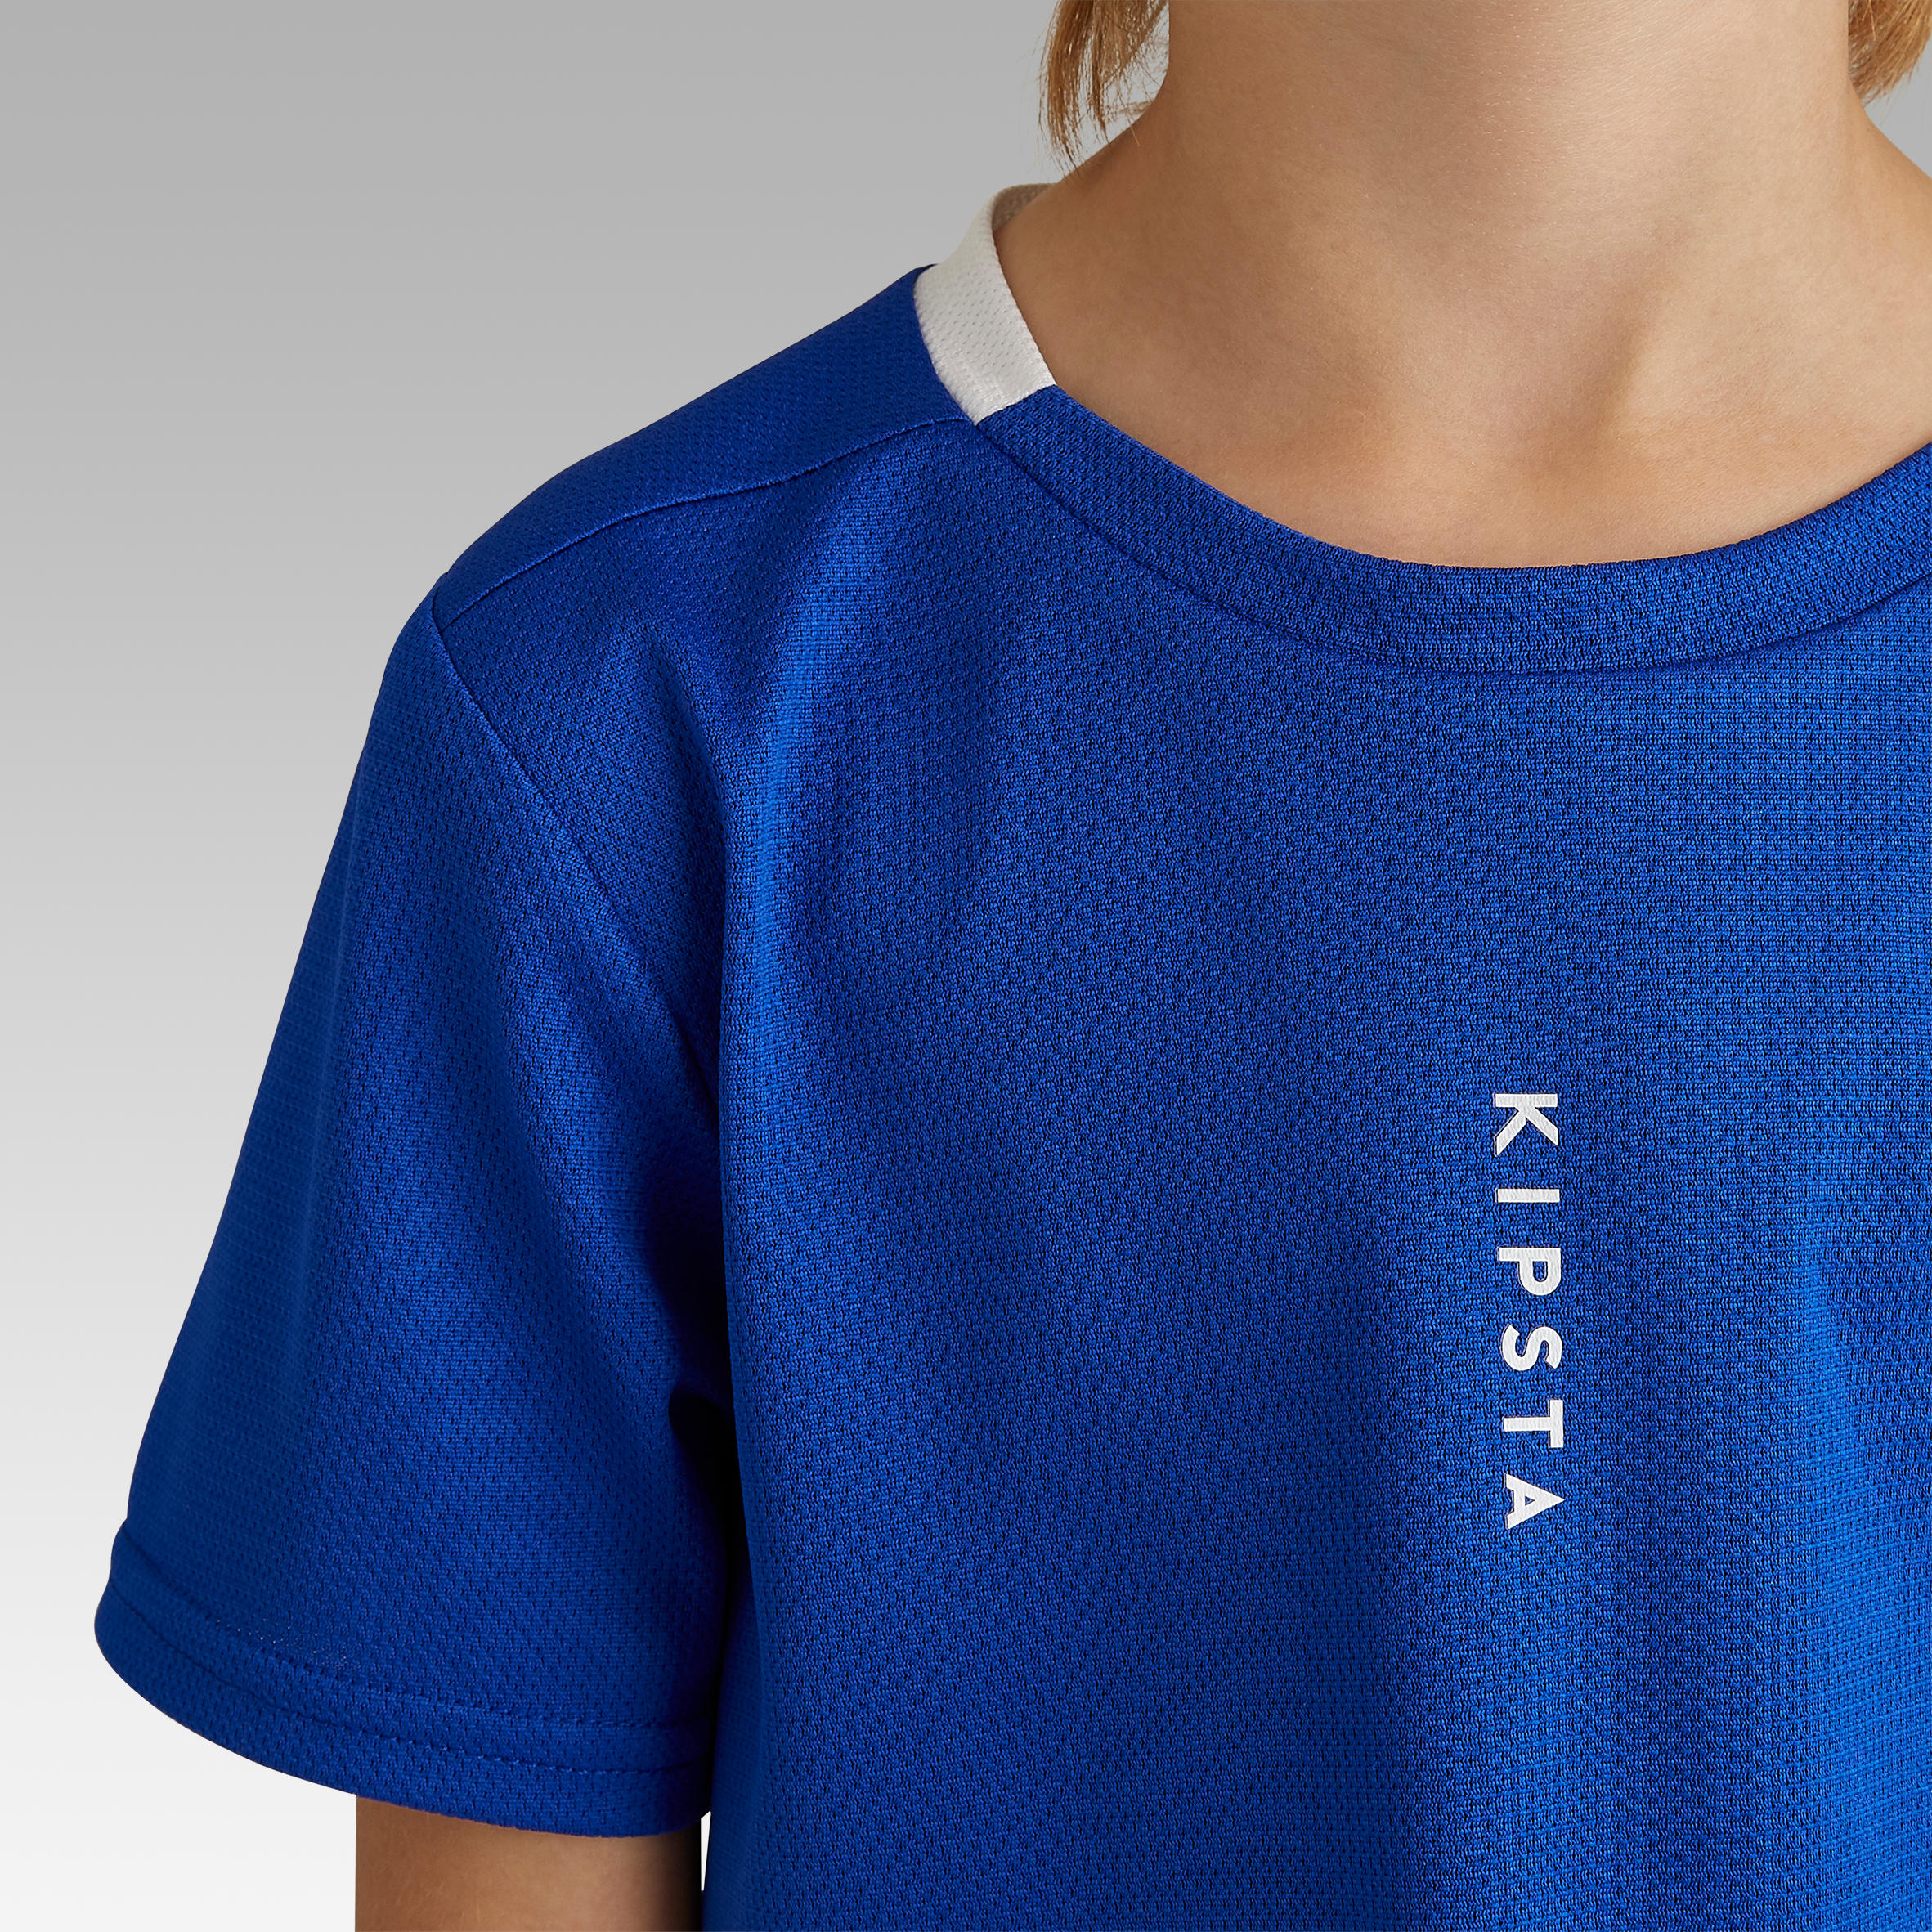 F100 Kids' Football Shirt - Indigo Blue 6/8